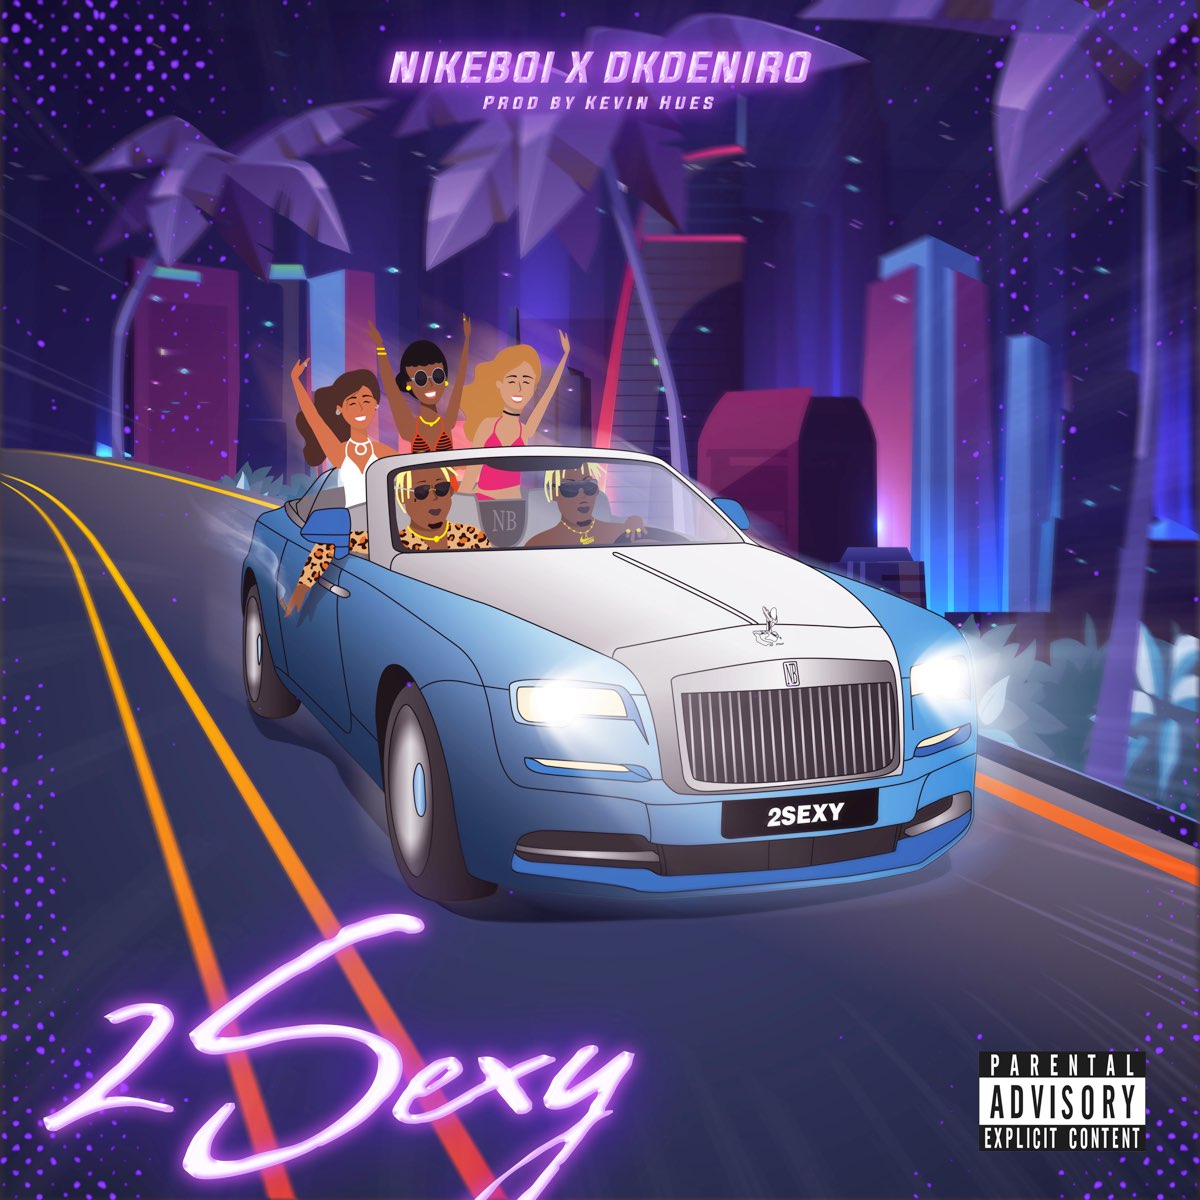 2 Sexy (feat. Dk Deniro) - Single by Nike Boi on Apple Music